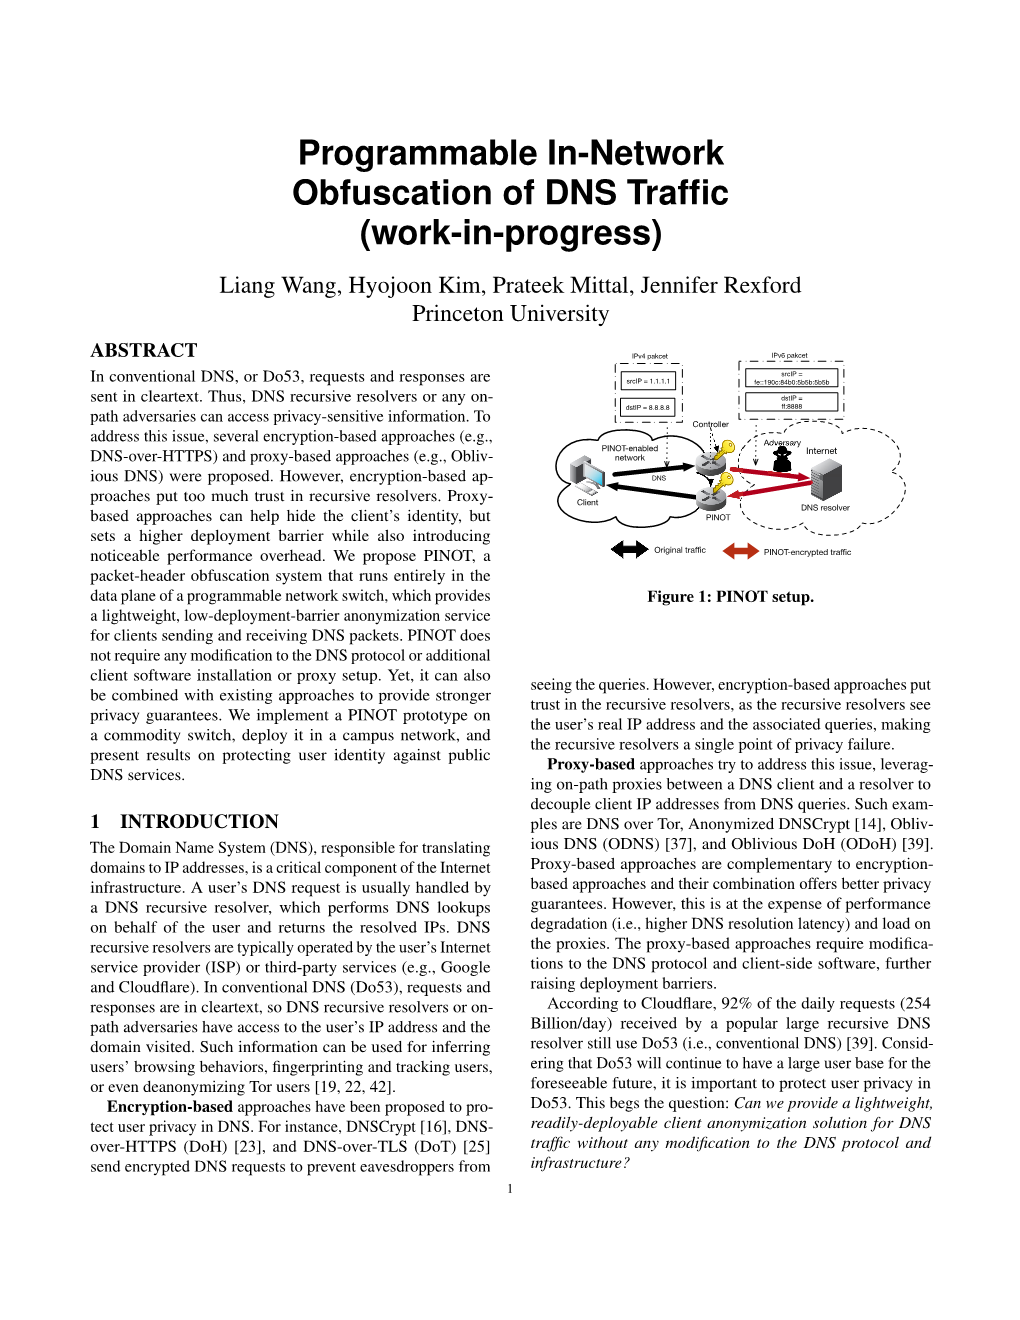 Programmable In-Network Obfuscation of DNS Traffic (Work-In-Progress) Liang Wang, Hyojoon Kim, Prateek Mittal, Jennifer Rexford Princeton University